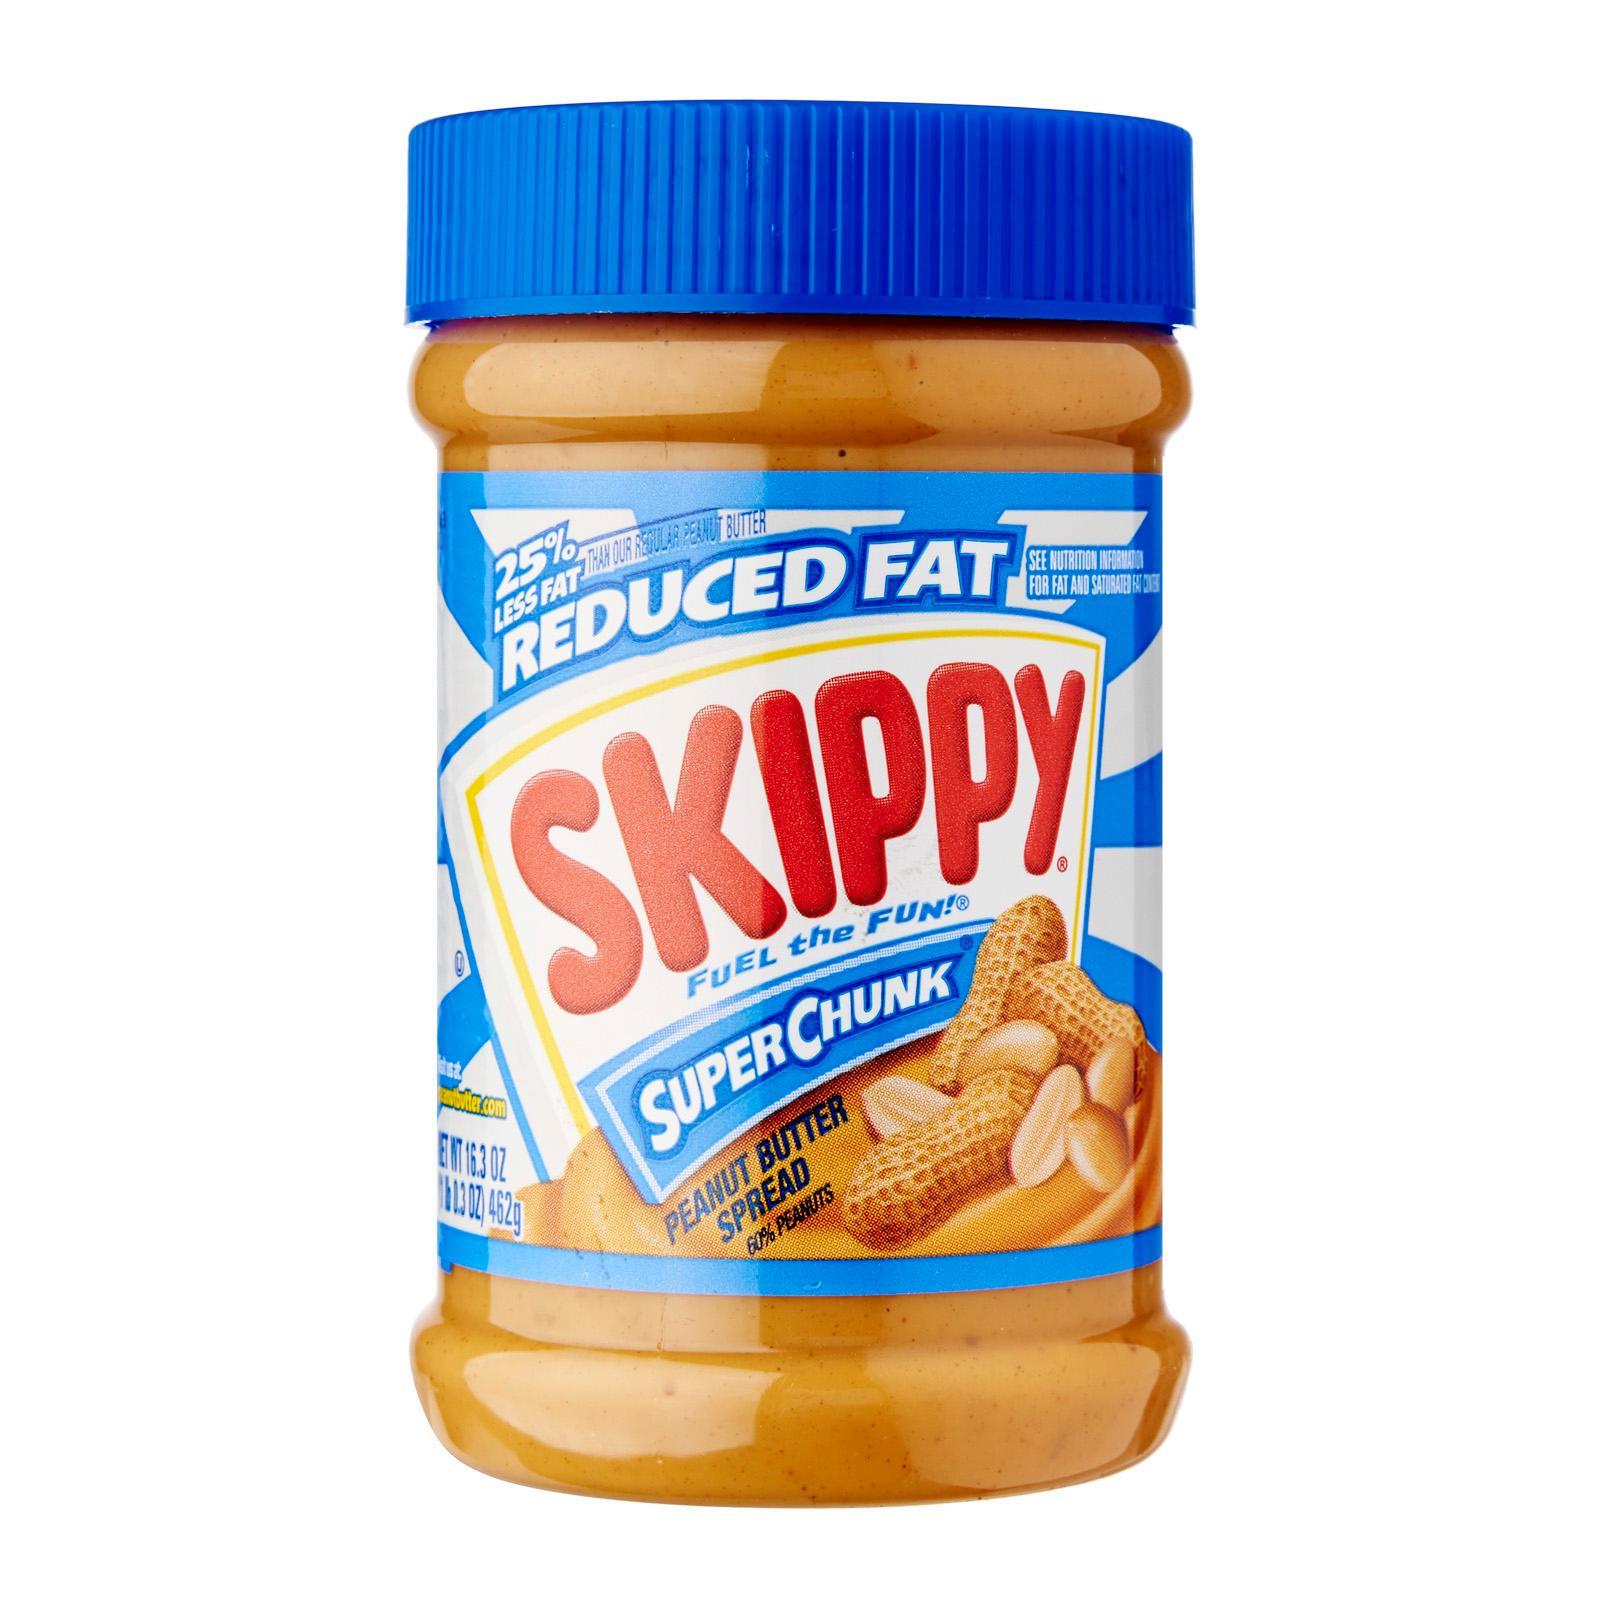 Skippy Reduced Fat Super Chunk Peanut Butter สกิปปี้ เนยถั่วชนิดหยาบ 462กรัม (สูตรลดไขมัน)